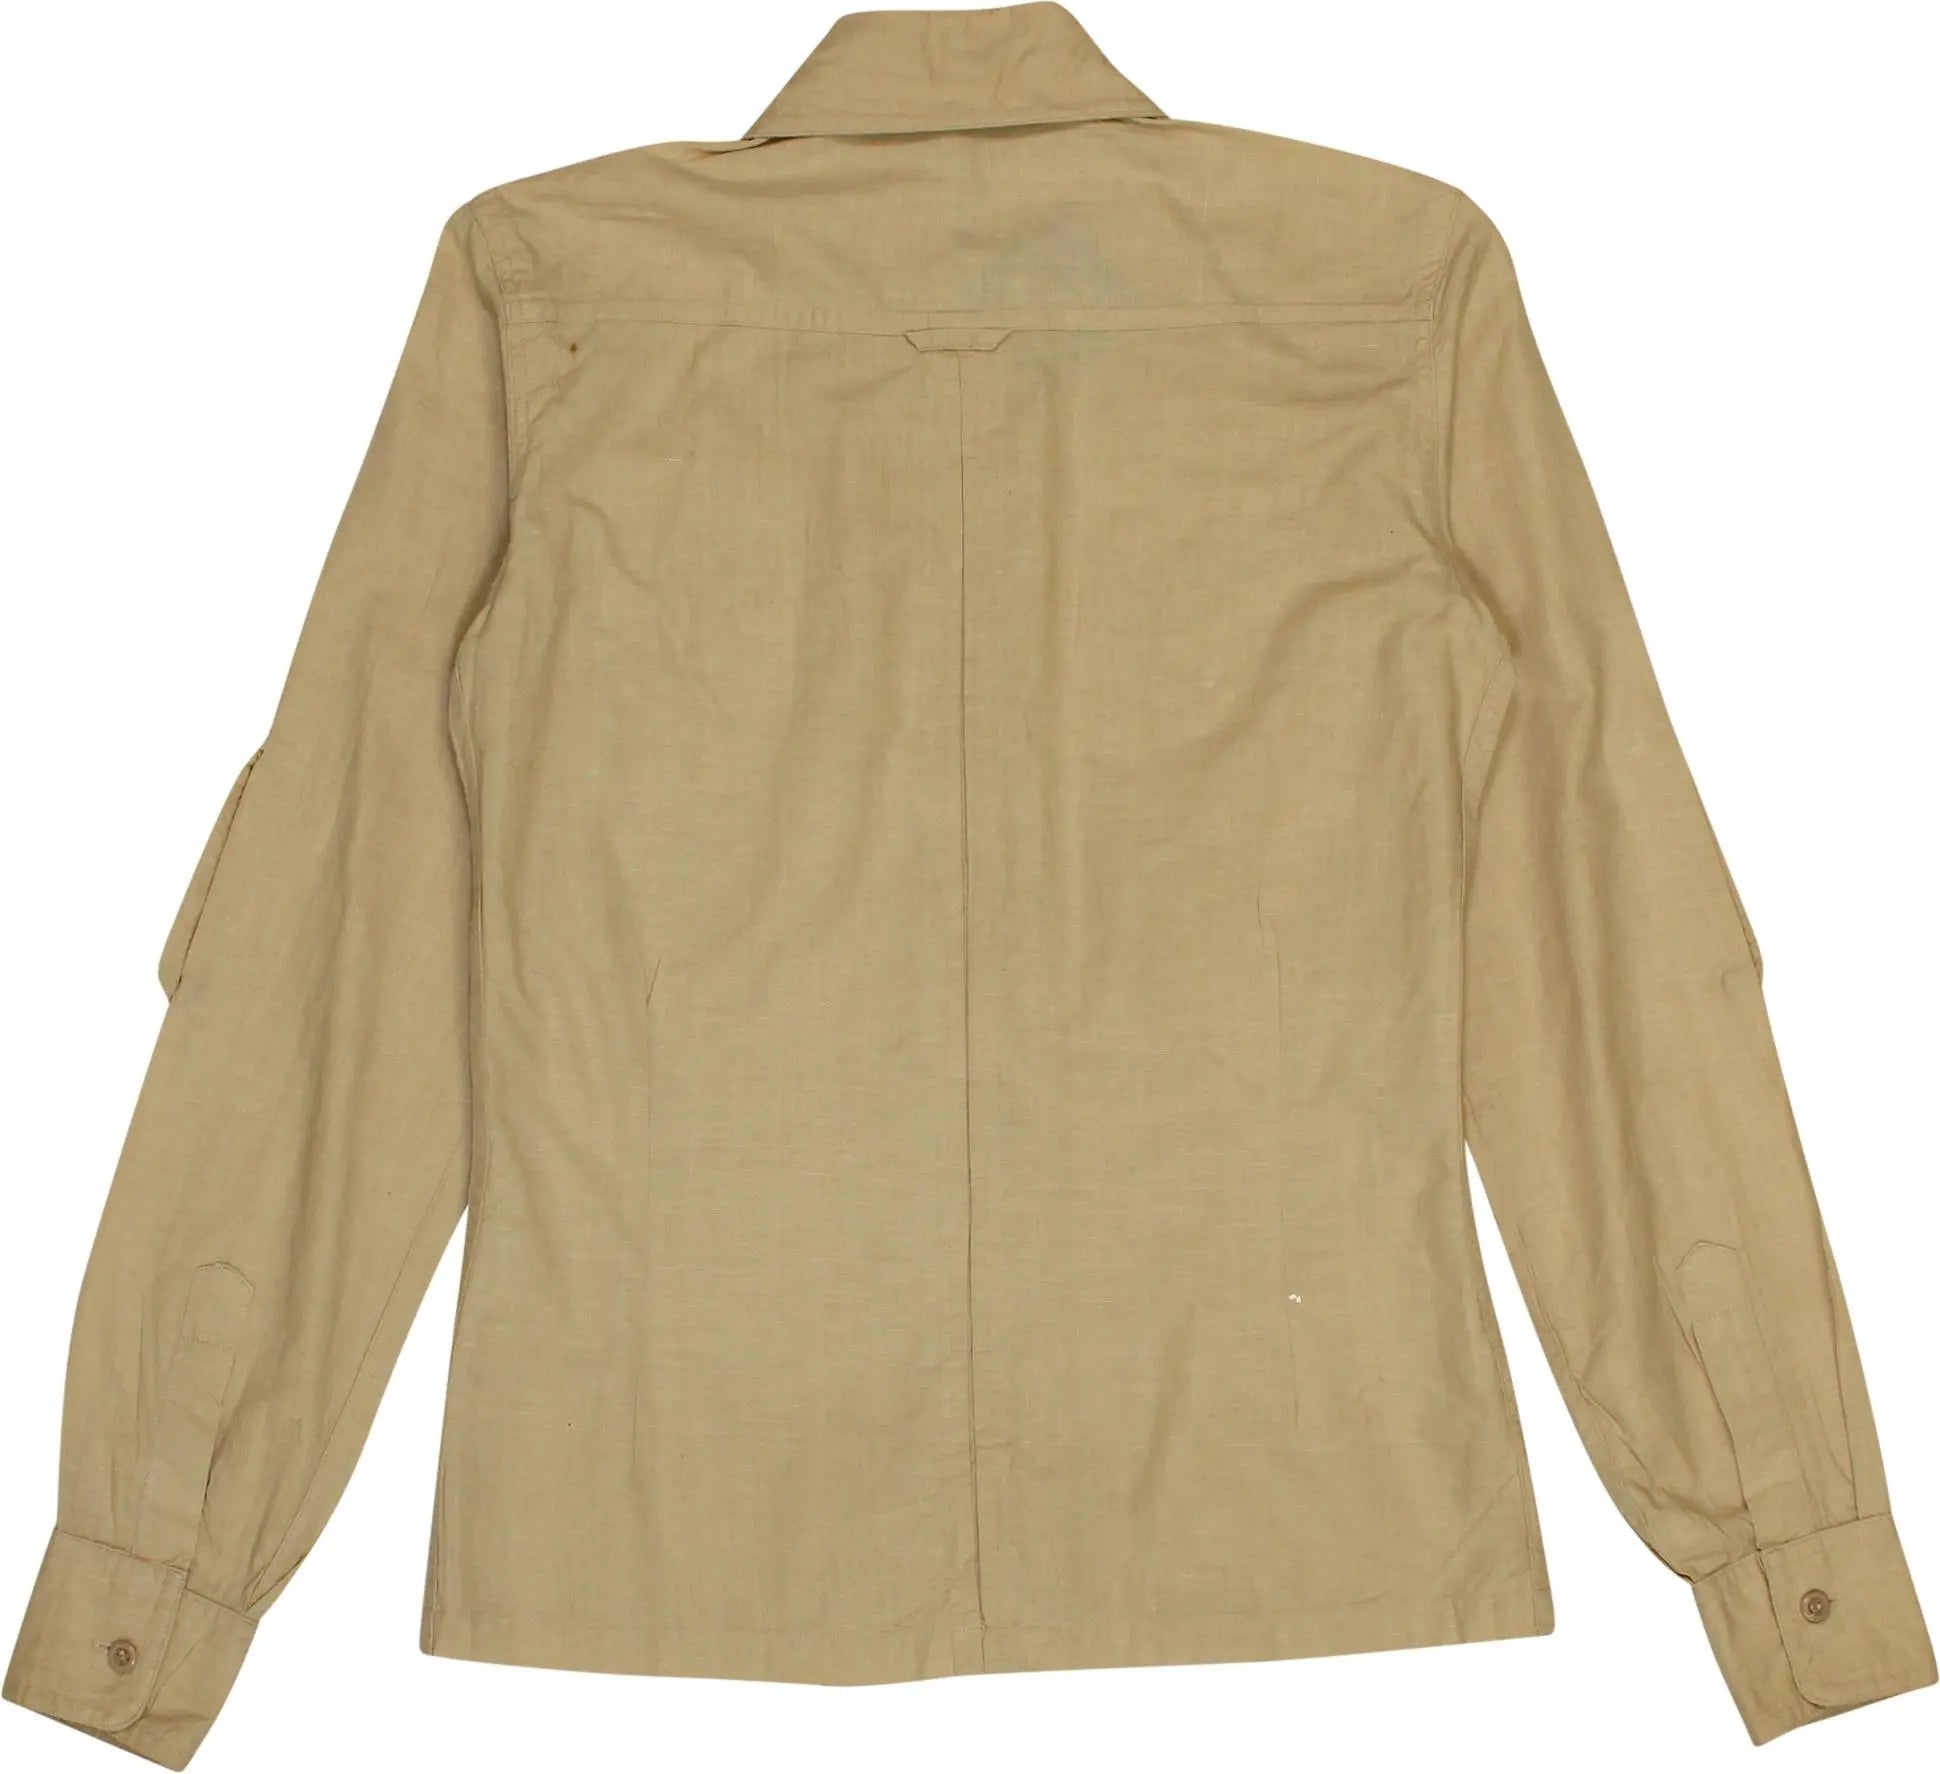 EK - 70s Shirt- ThriftTale.com - Vintage and second handclothing